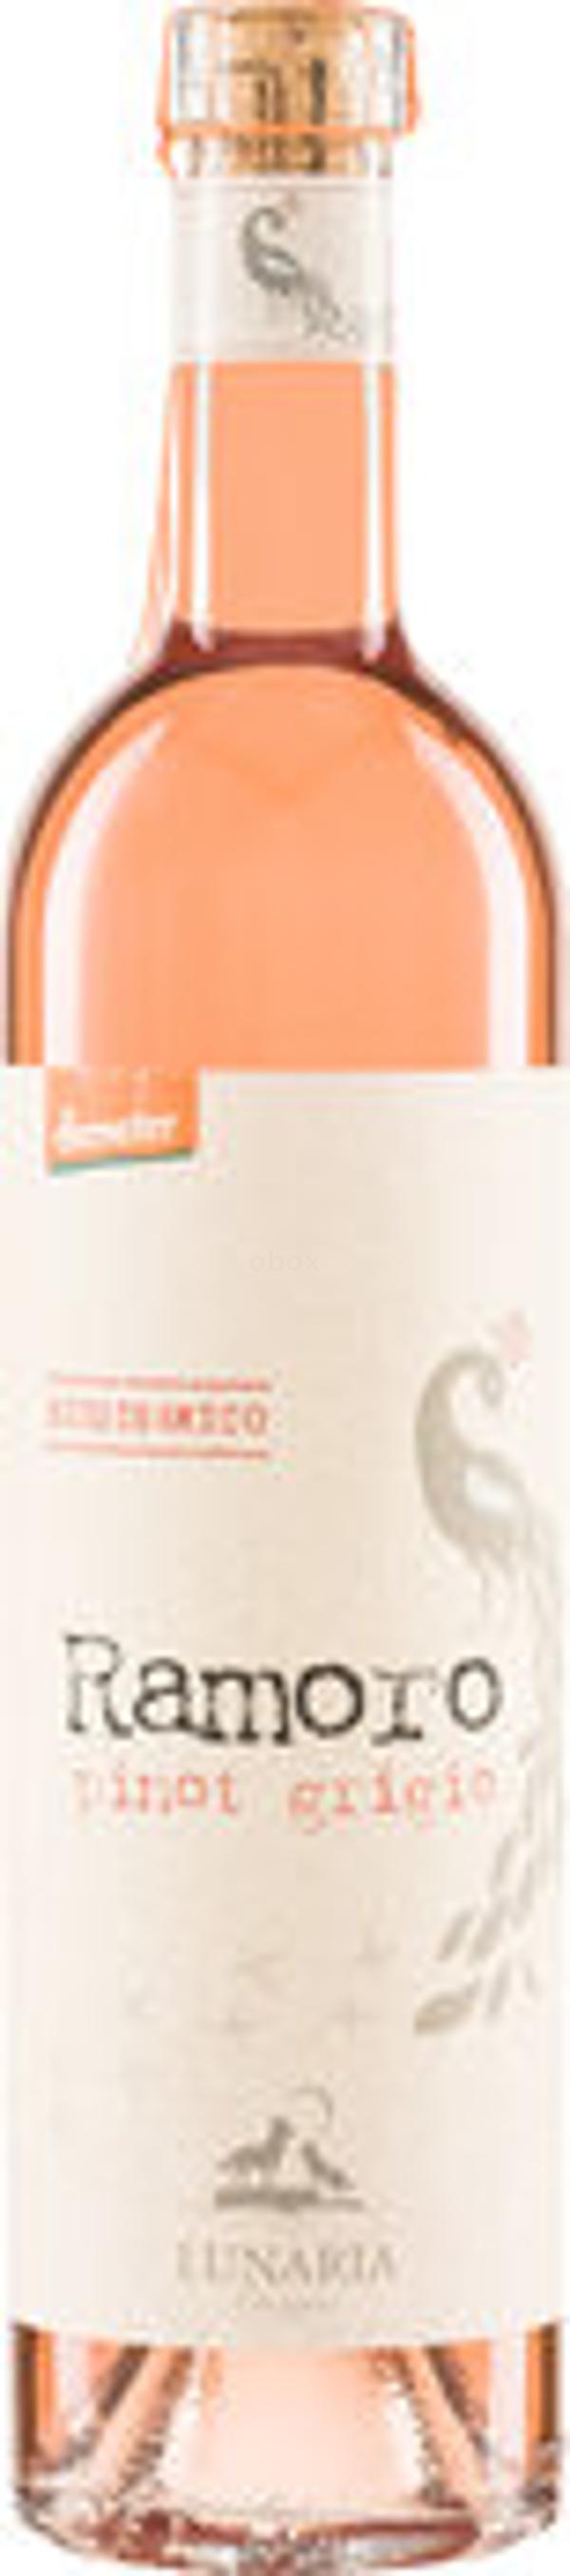 Produktfoto zu RAMORO Pinot Grigio Terre di C